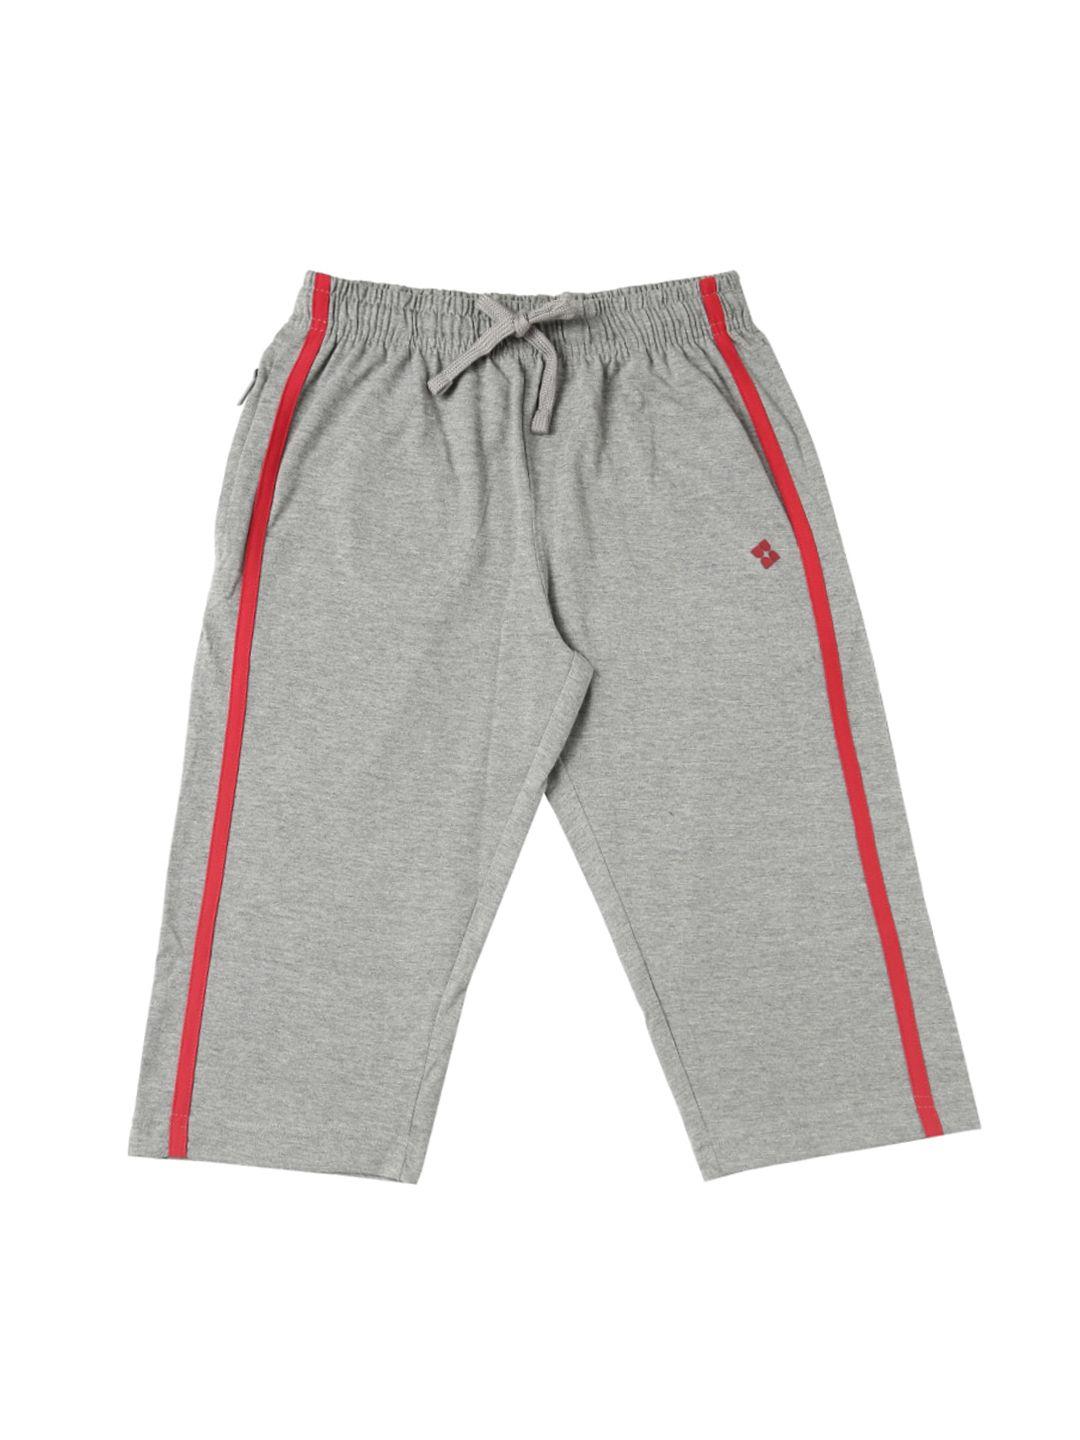 dollar boys grey solid regular fit regular shorts